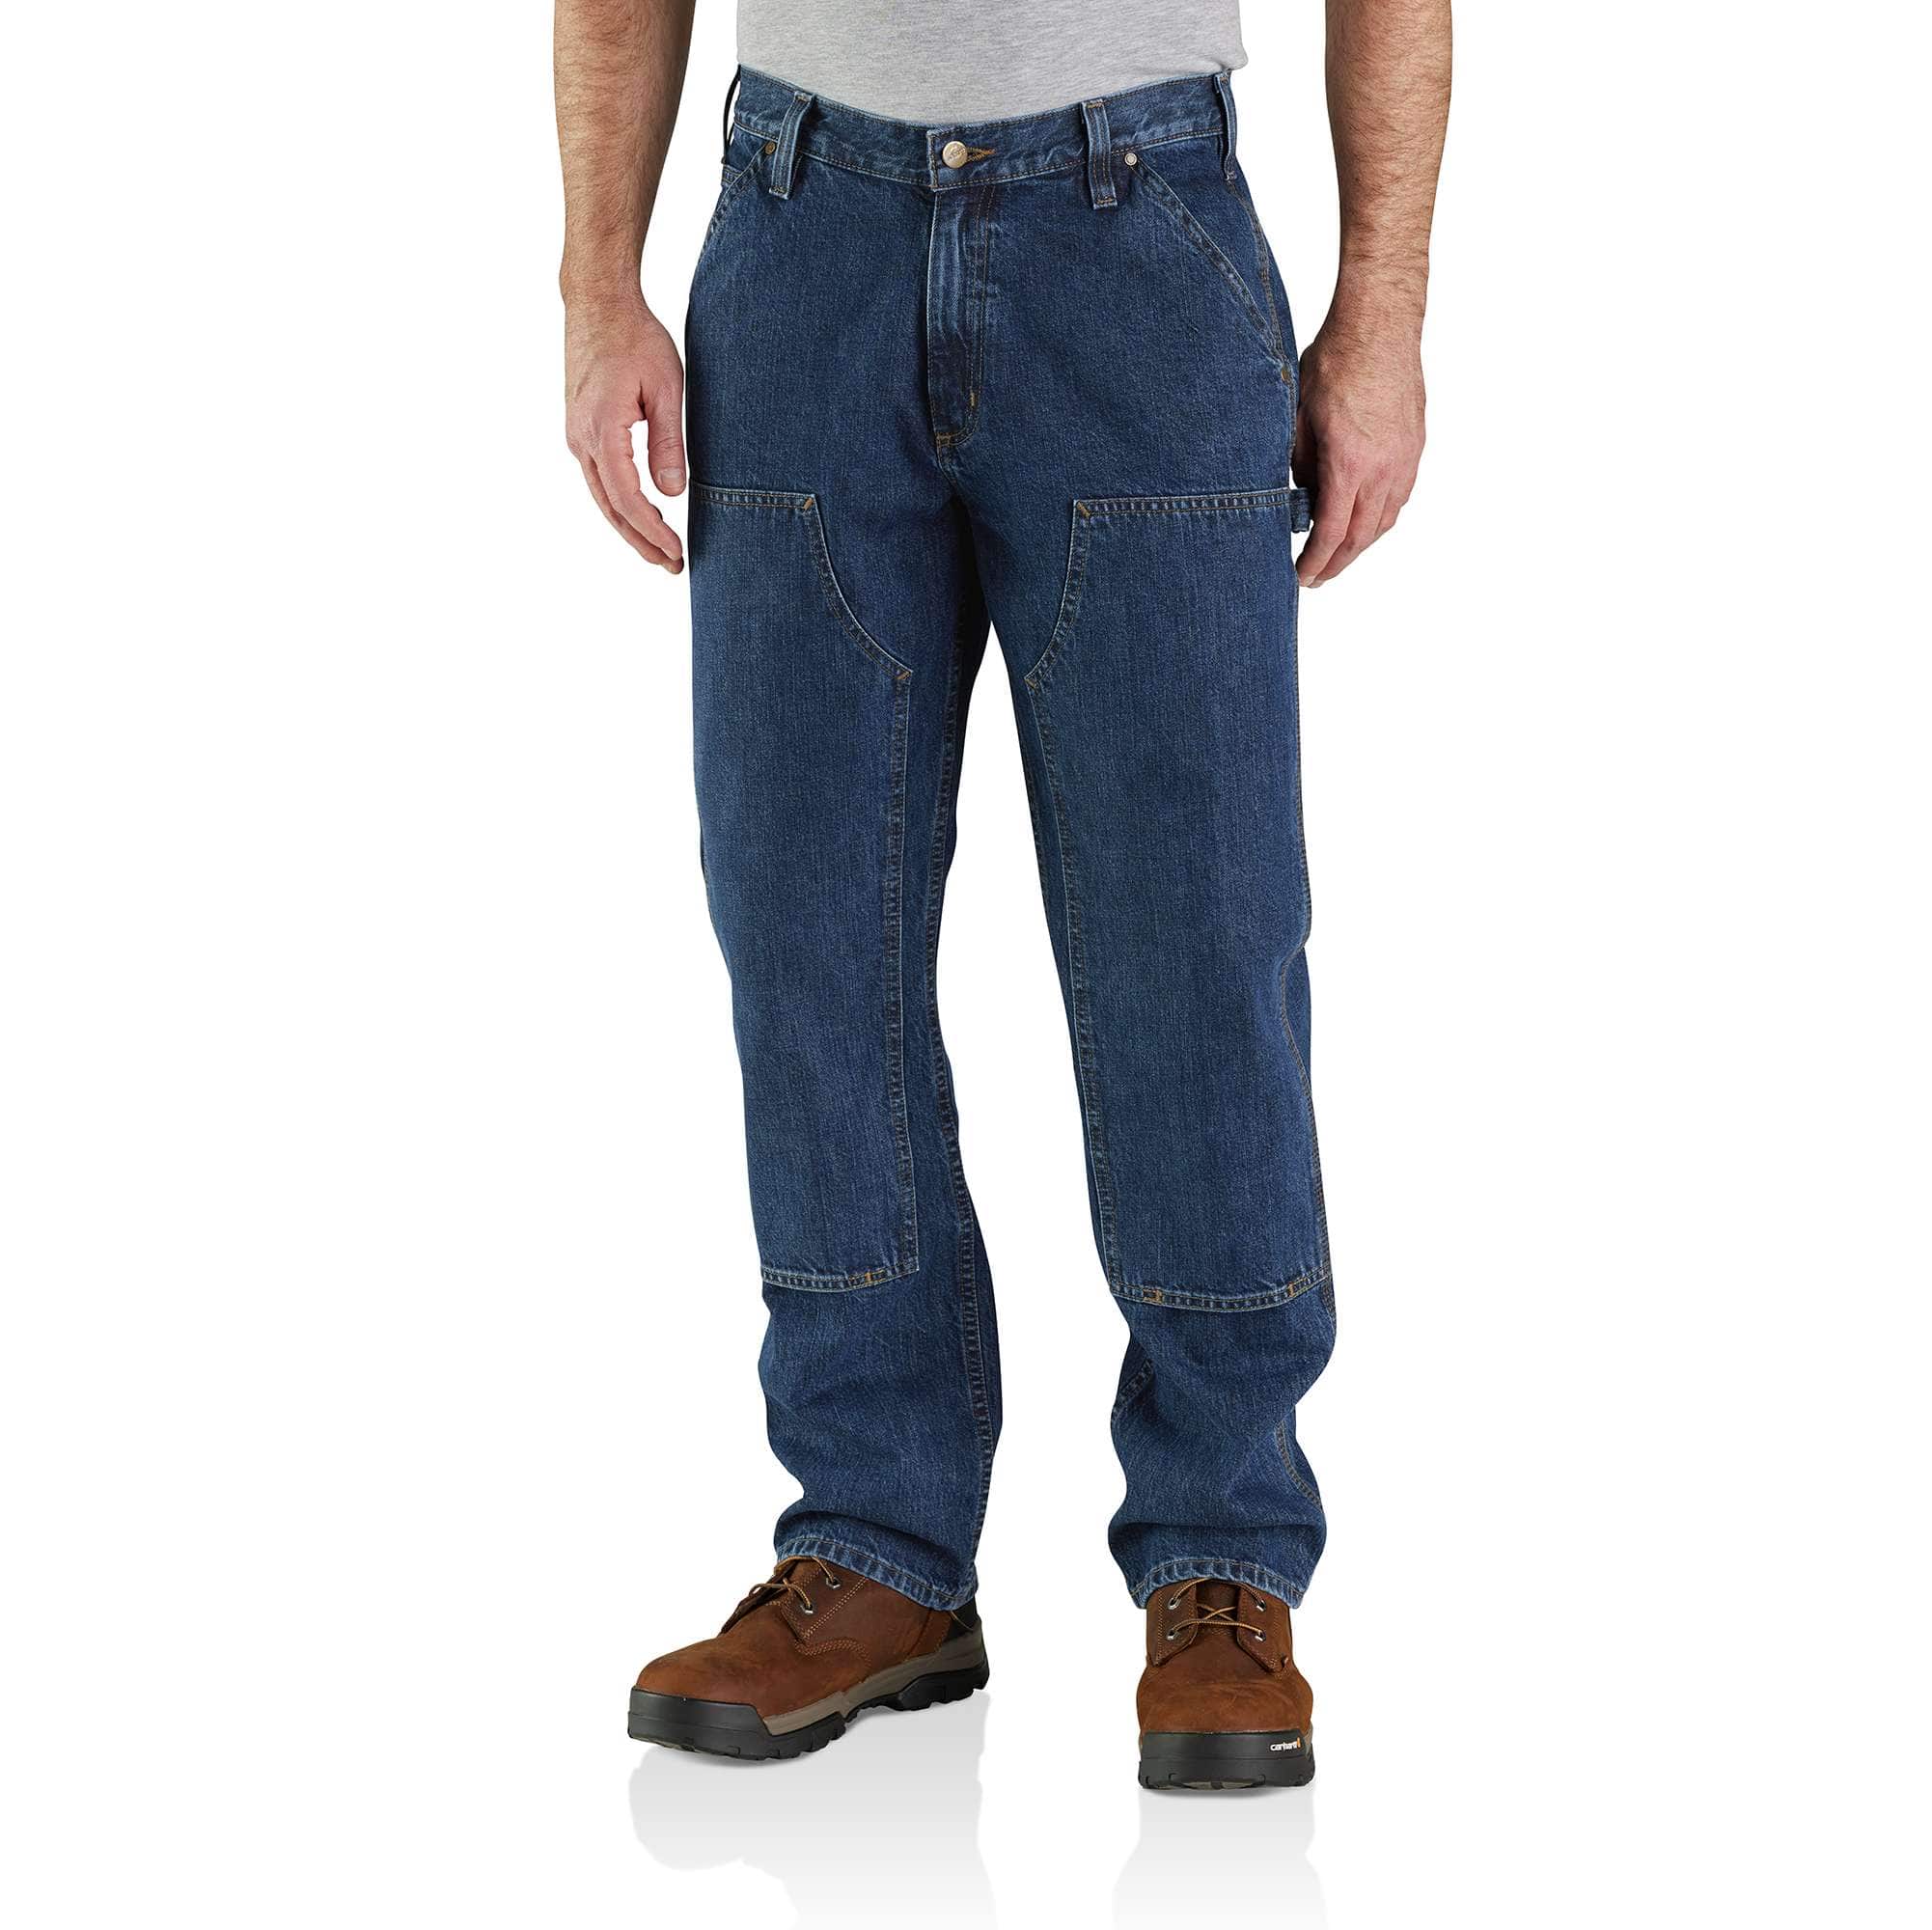 CARHARTT Rebel Jeans Mens Red Denim Pants Slim Fit. Size W26 L32 -   Canada